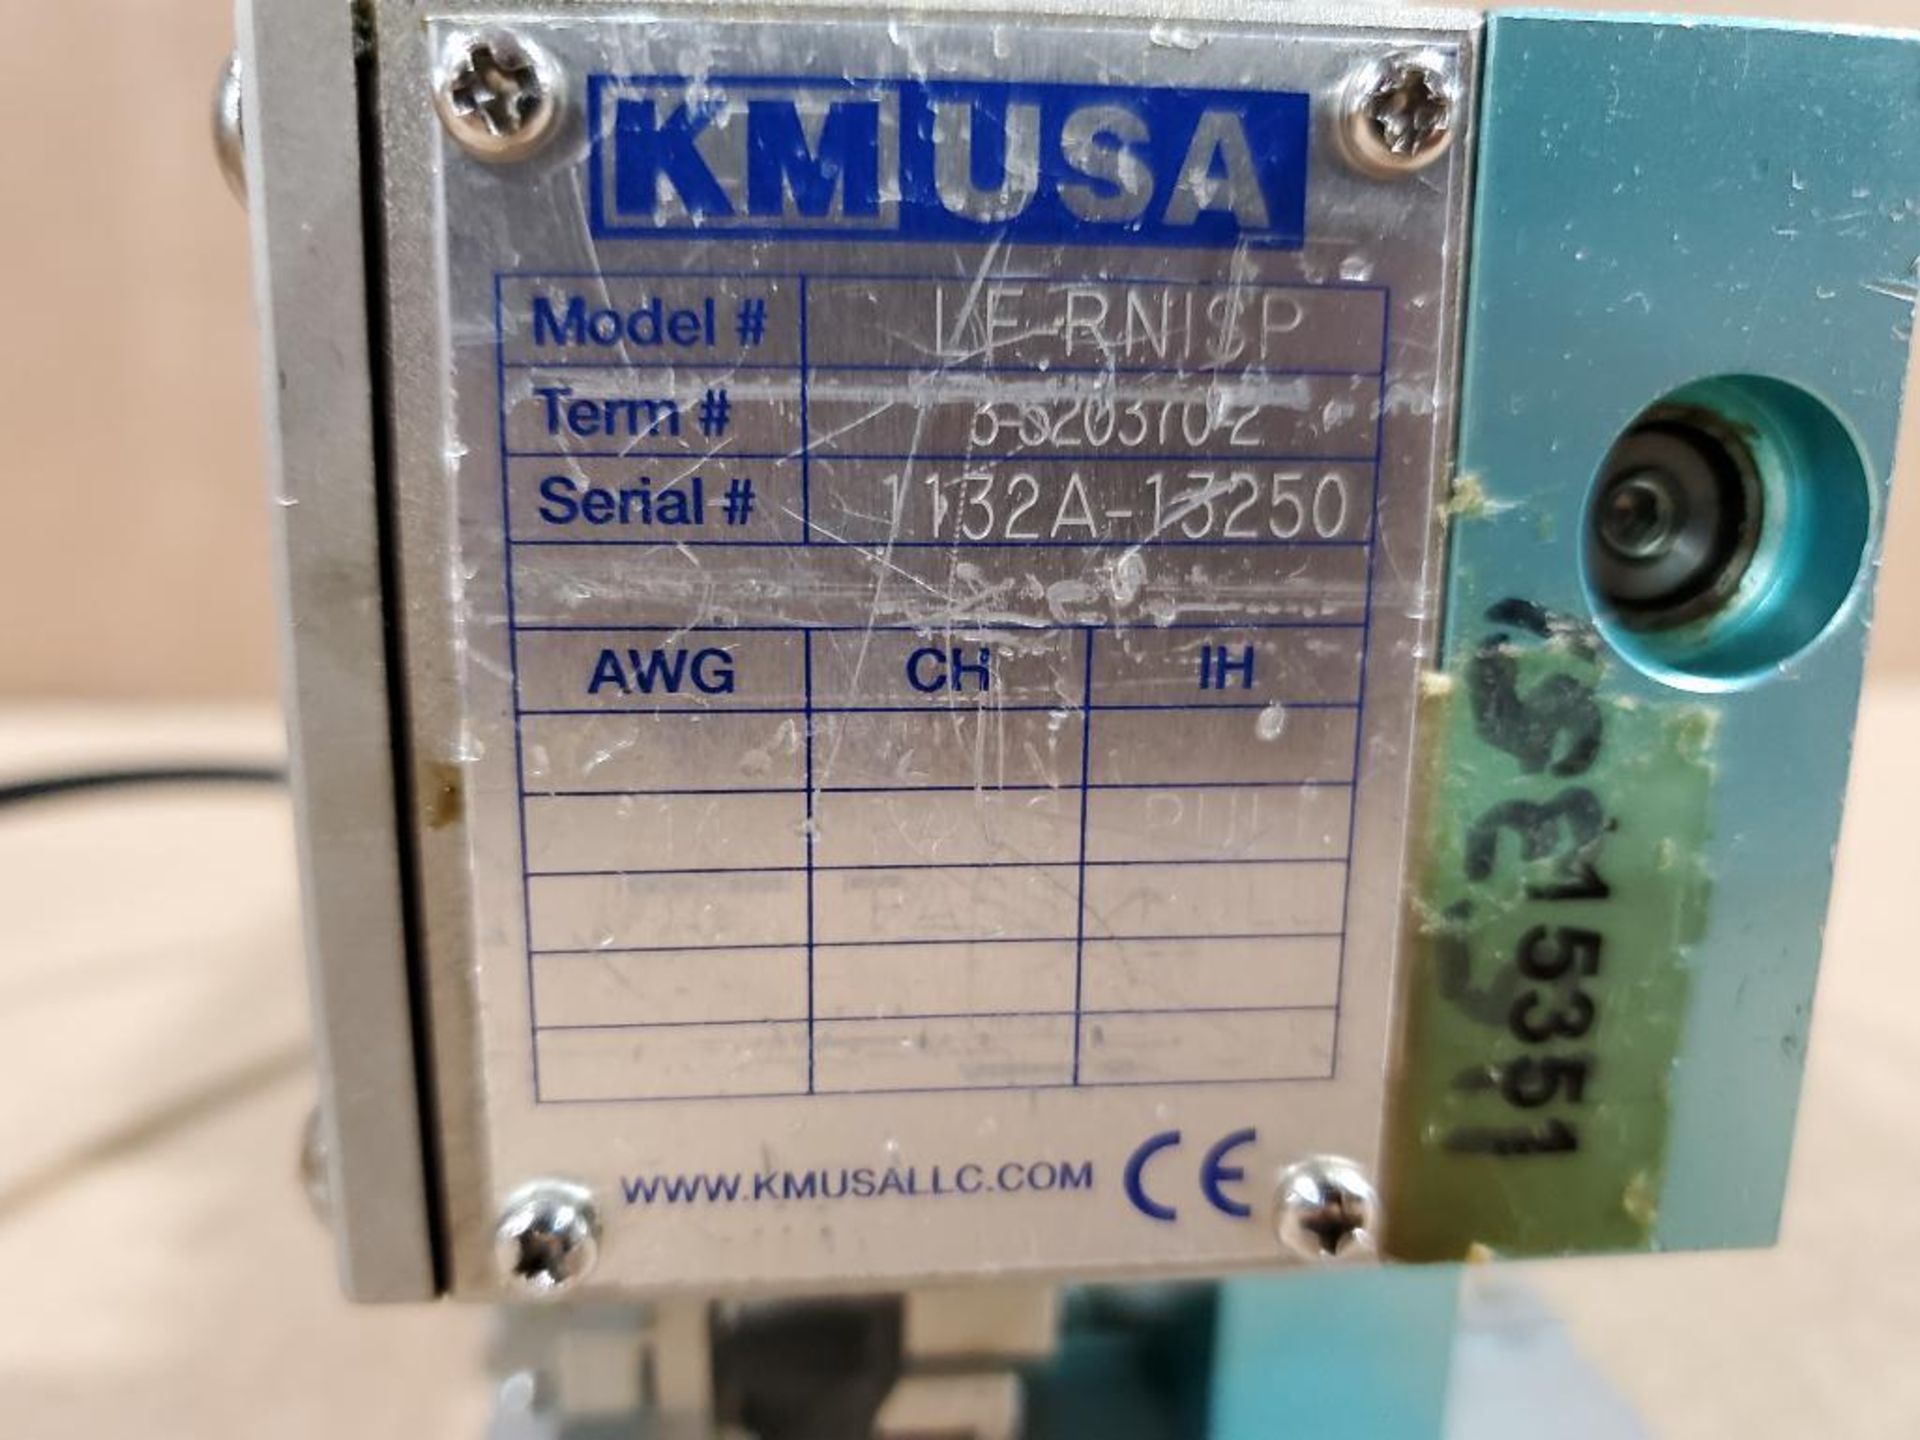 KM USA wire terminal applicator. Number LF-RNISP. - Image 4 of 6